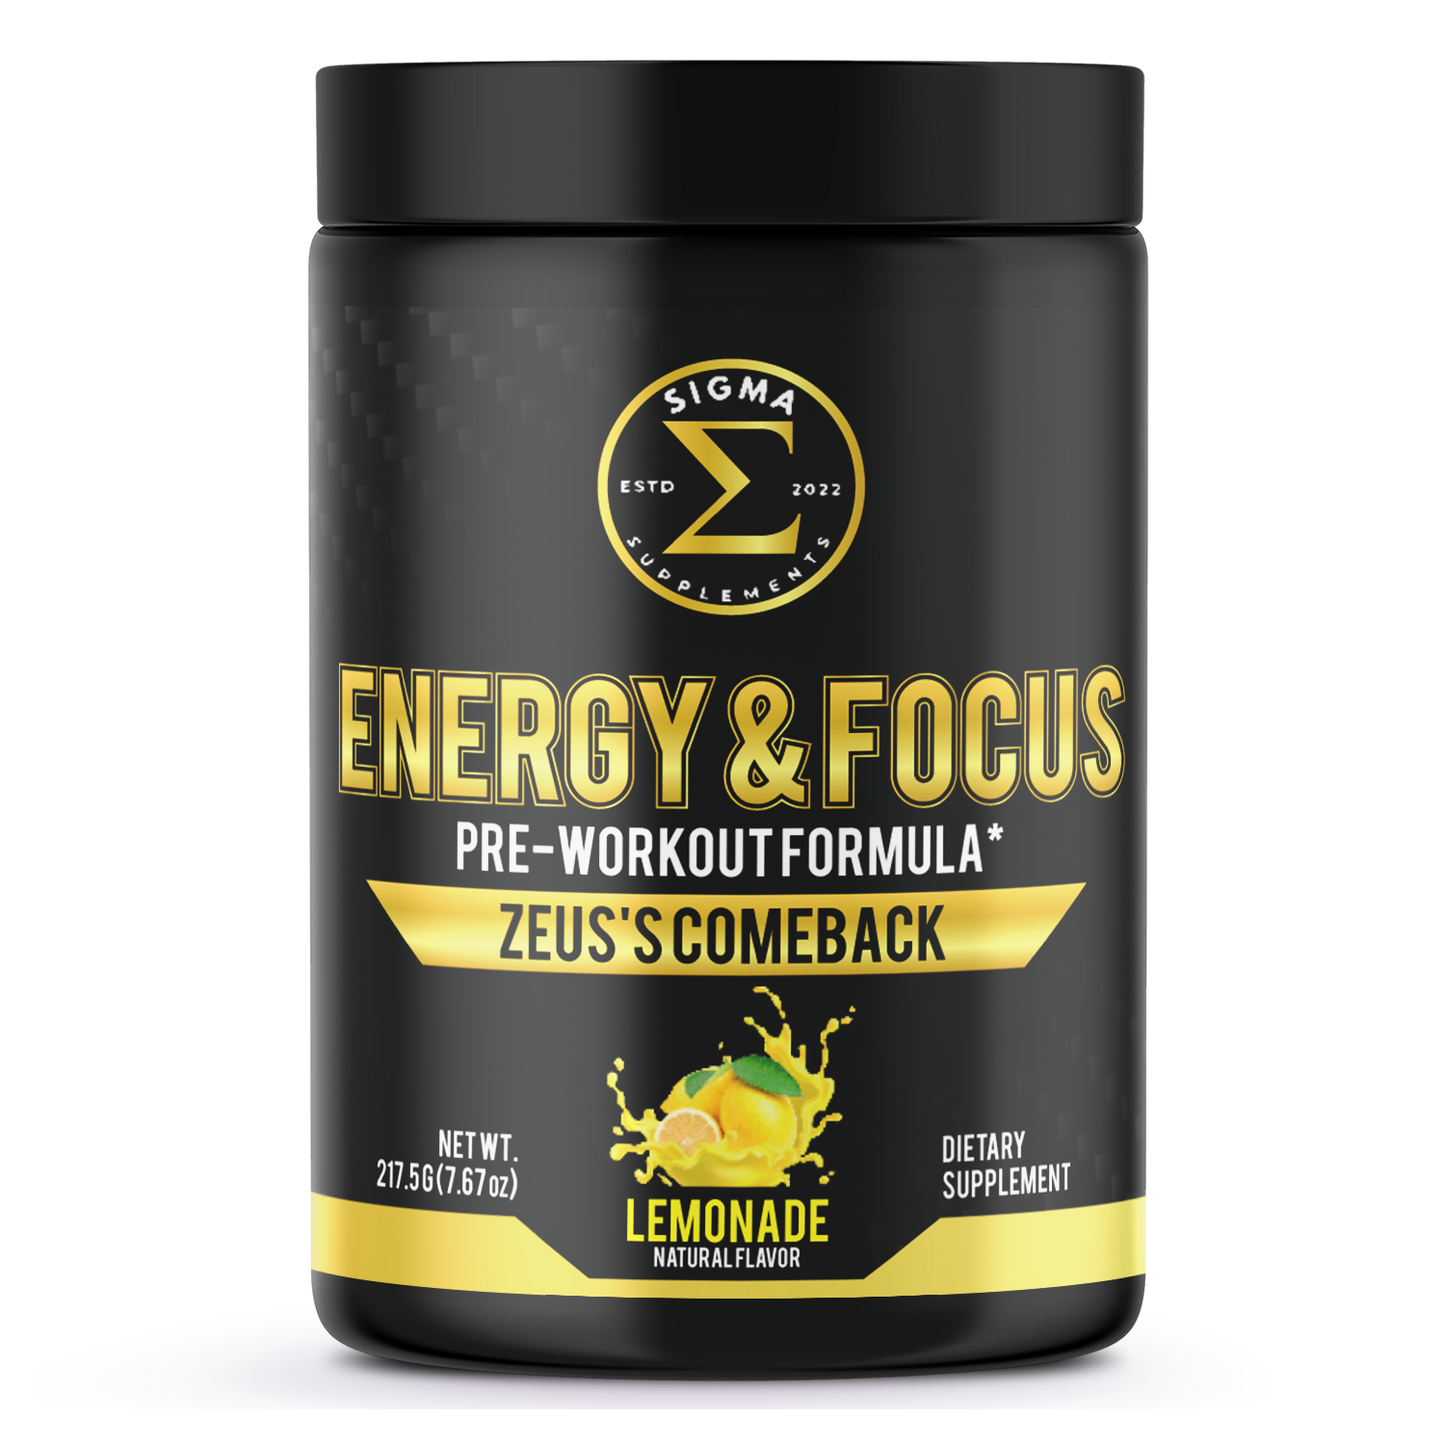 Zeus Comeback Lemonade- Pre Workout